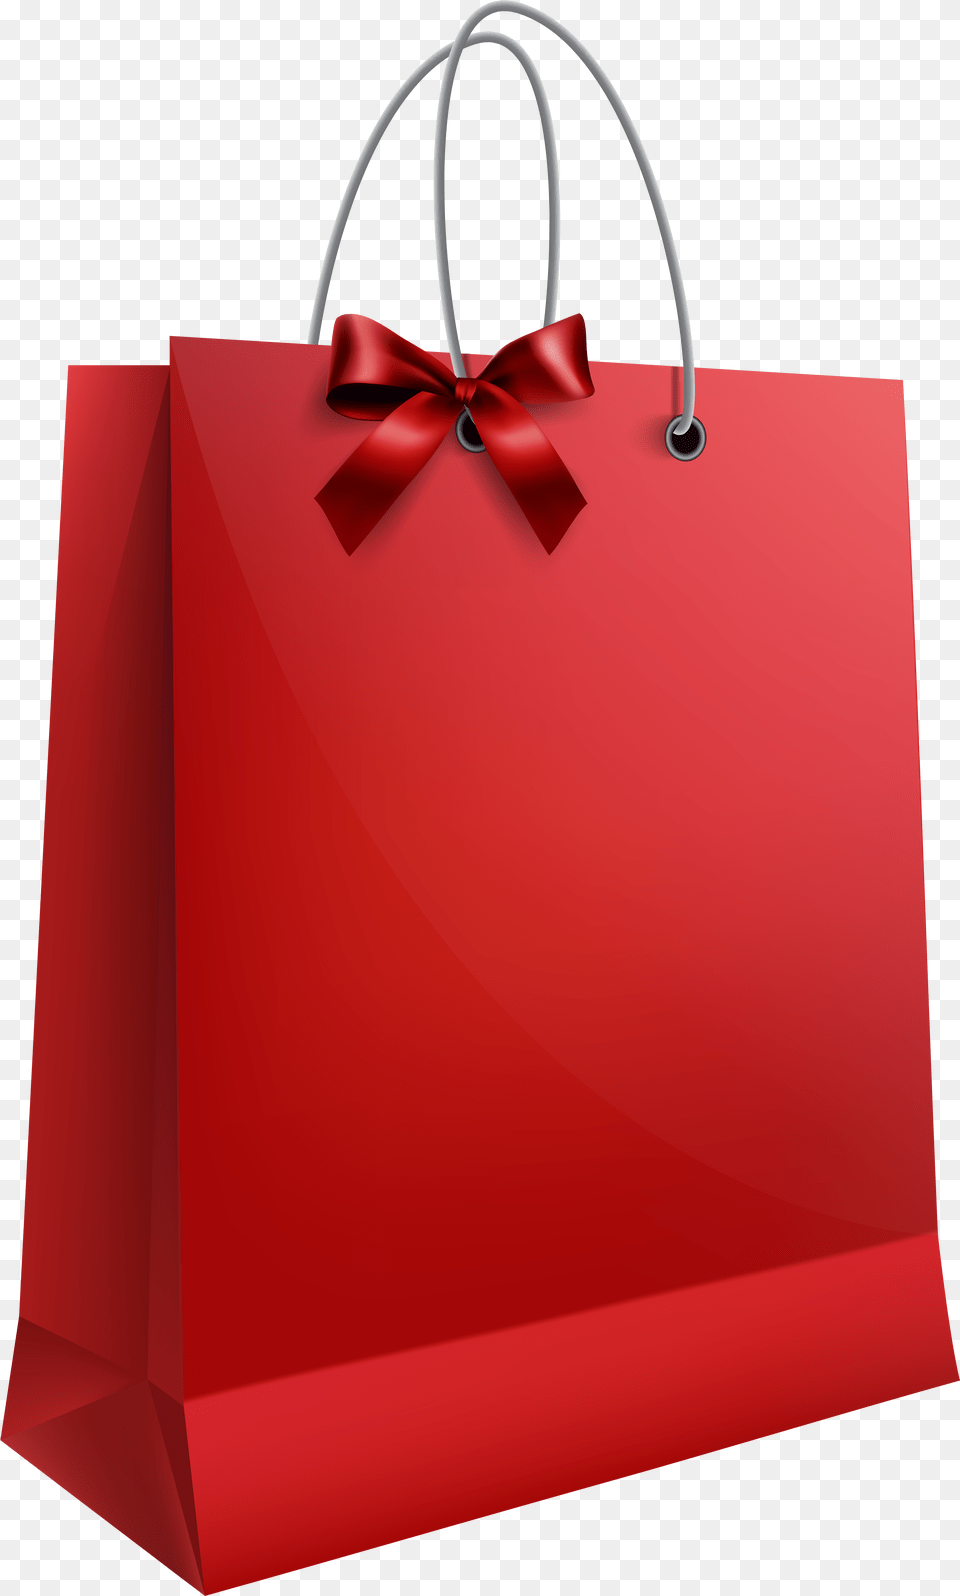 Bag Clipart Gift Christmas Gift Bag Clipart, Shopping Bag, Tote Bag, Accessories, Handbag Free Png